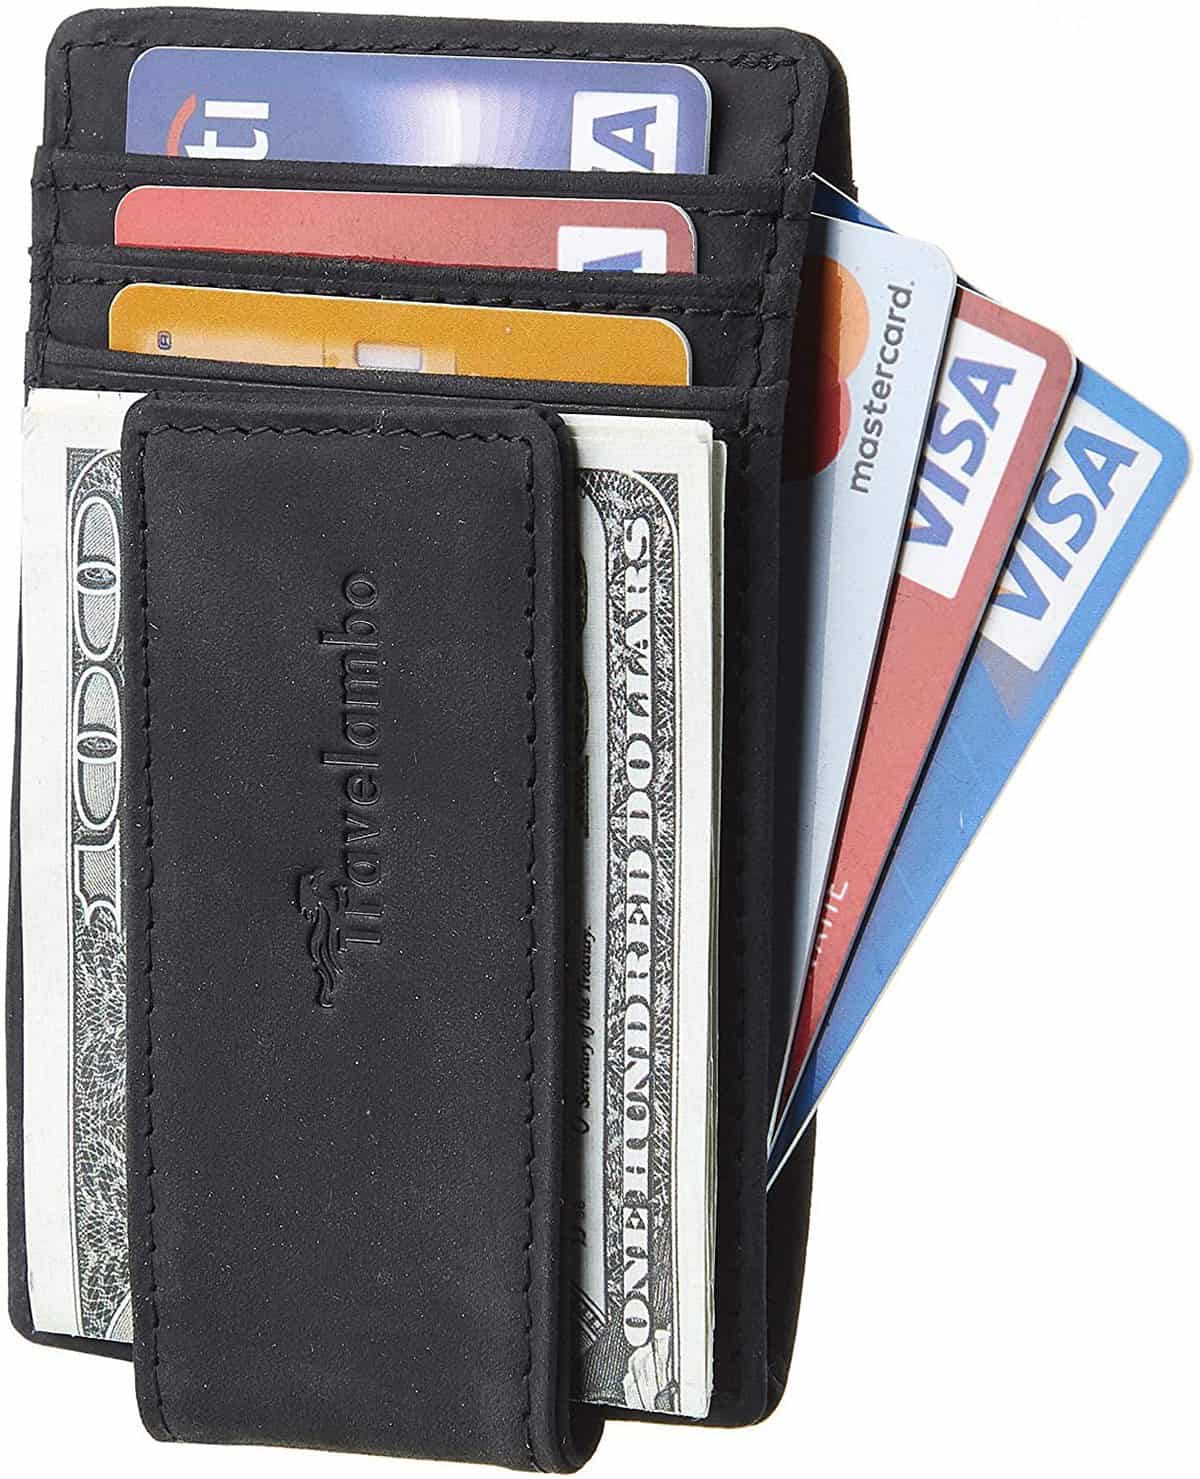 Storus Smart Money Clip Card Holder Wallet Scratch Resistant Titanium Minimalist Slim Pocket Wallet Metal Personalization Included 